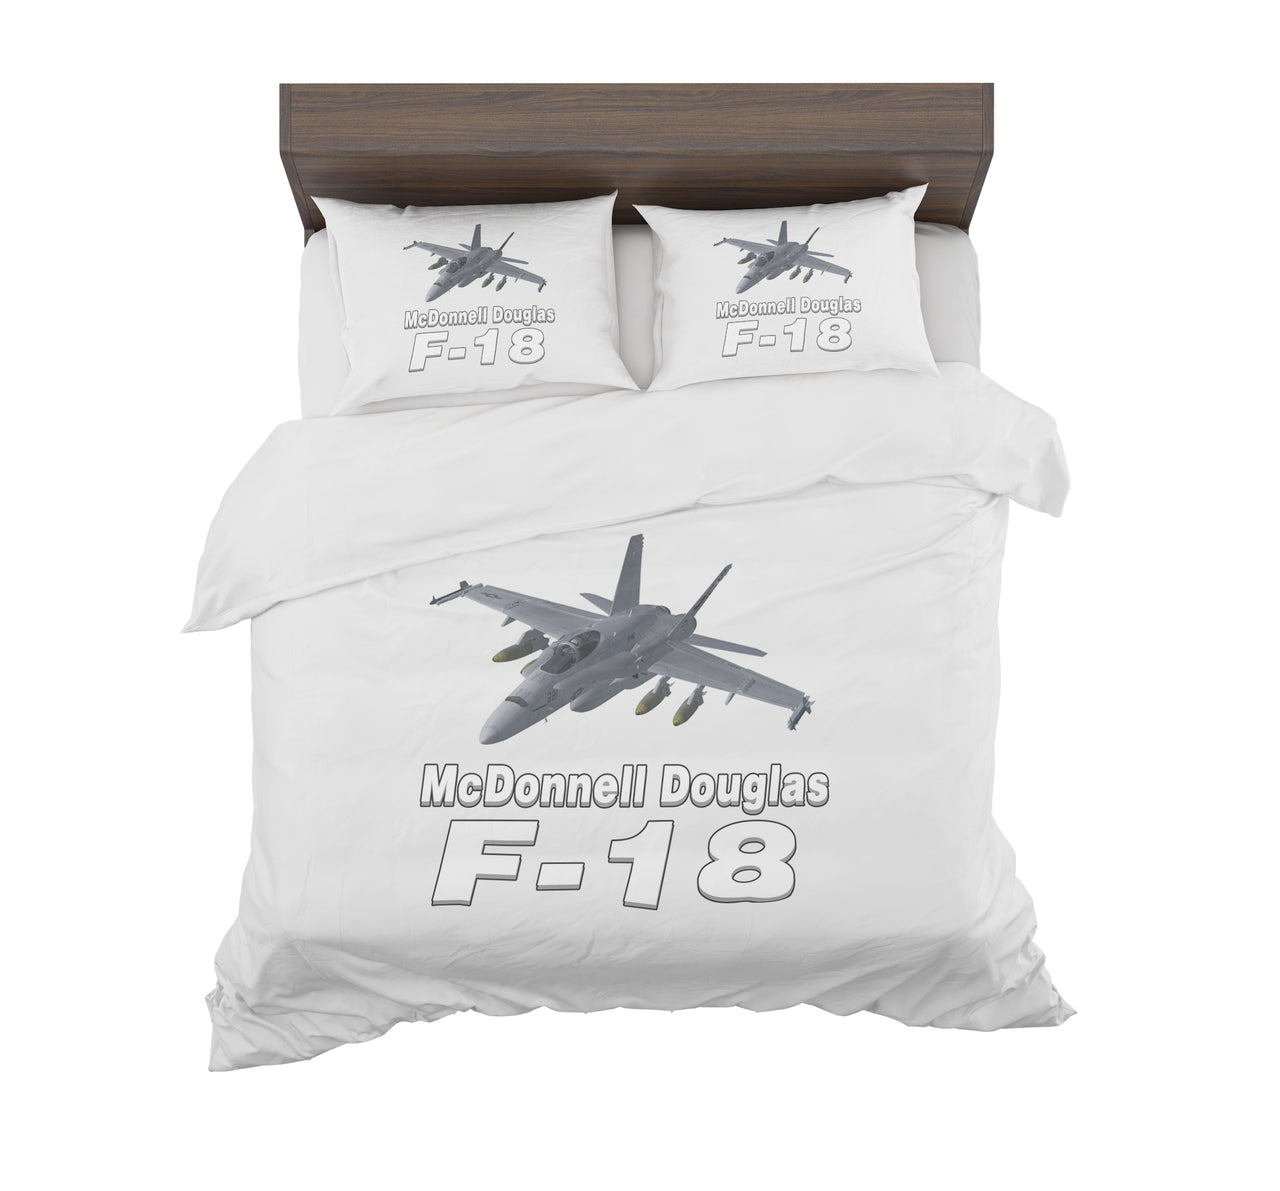 The McDonnell Douglas F18 Designed Bedding Sets